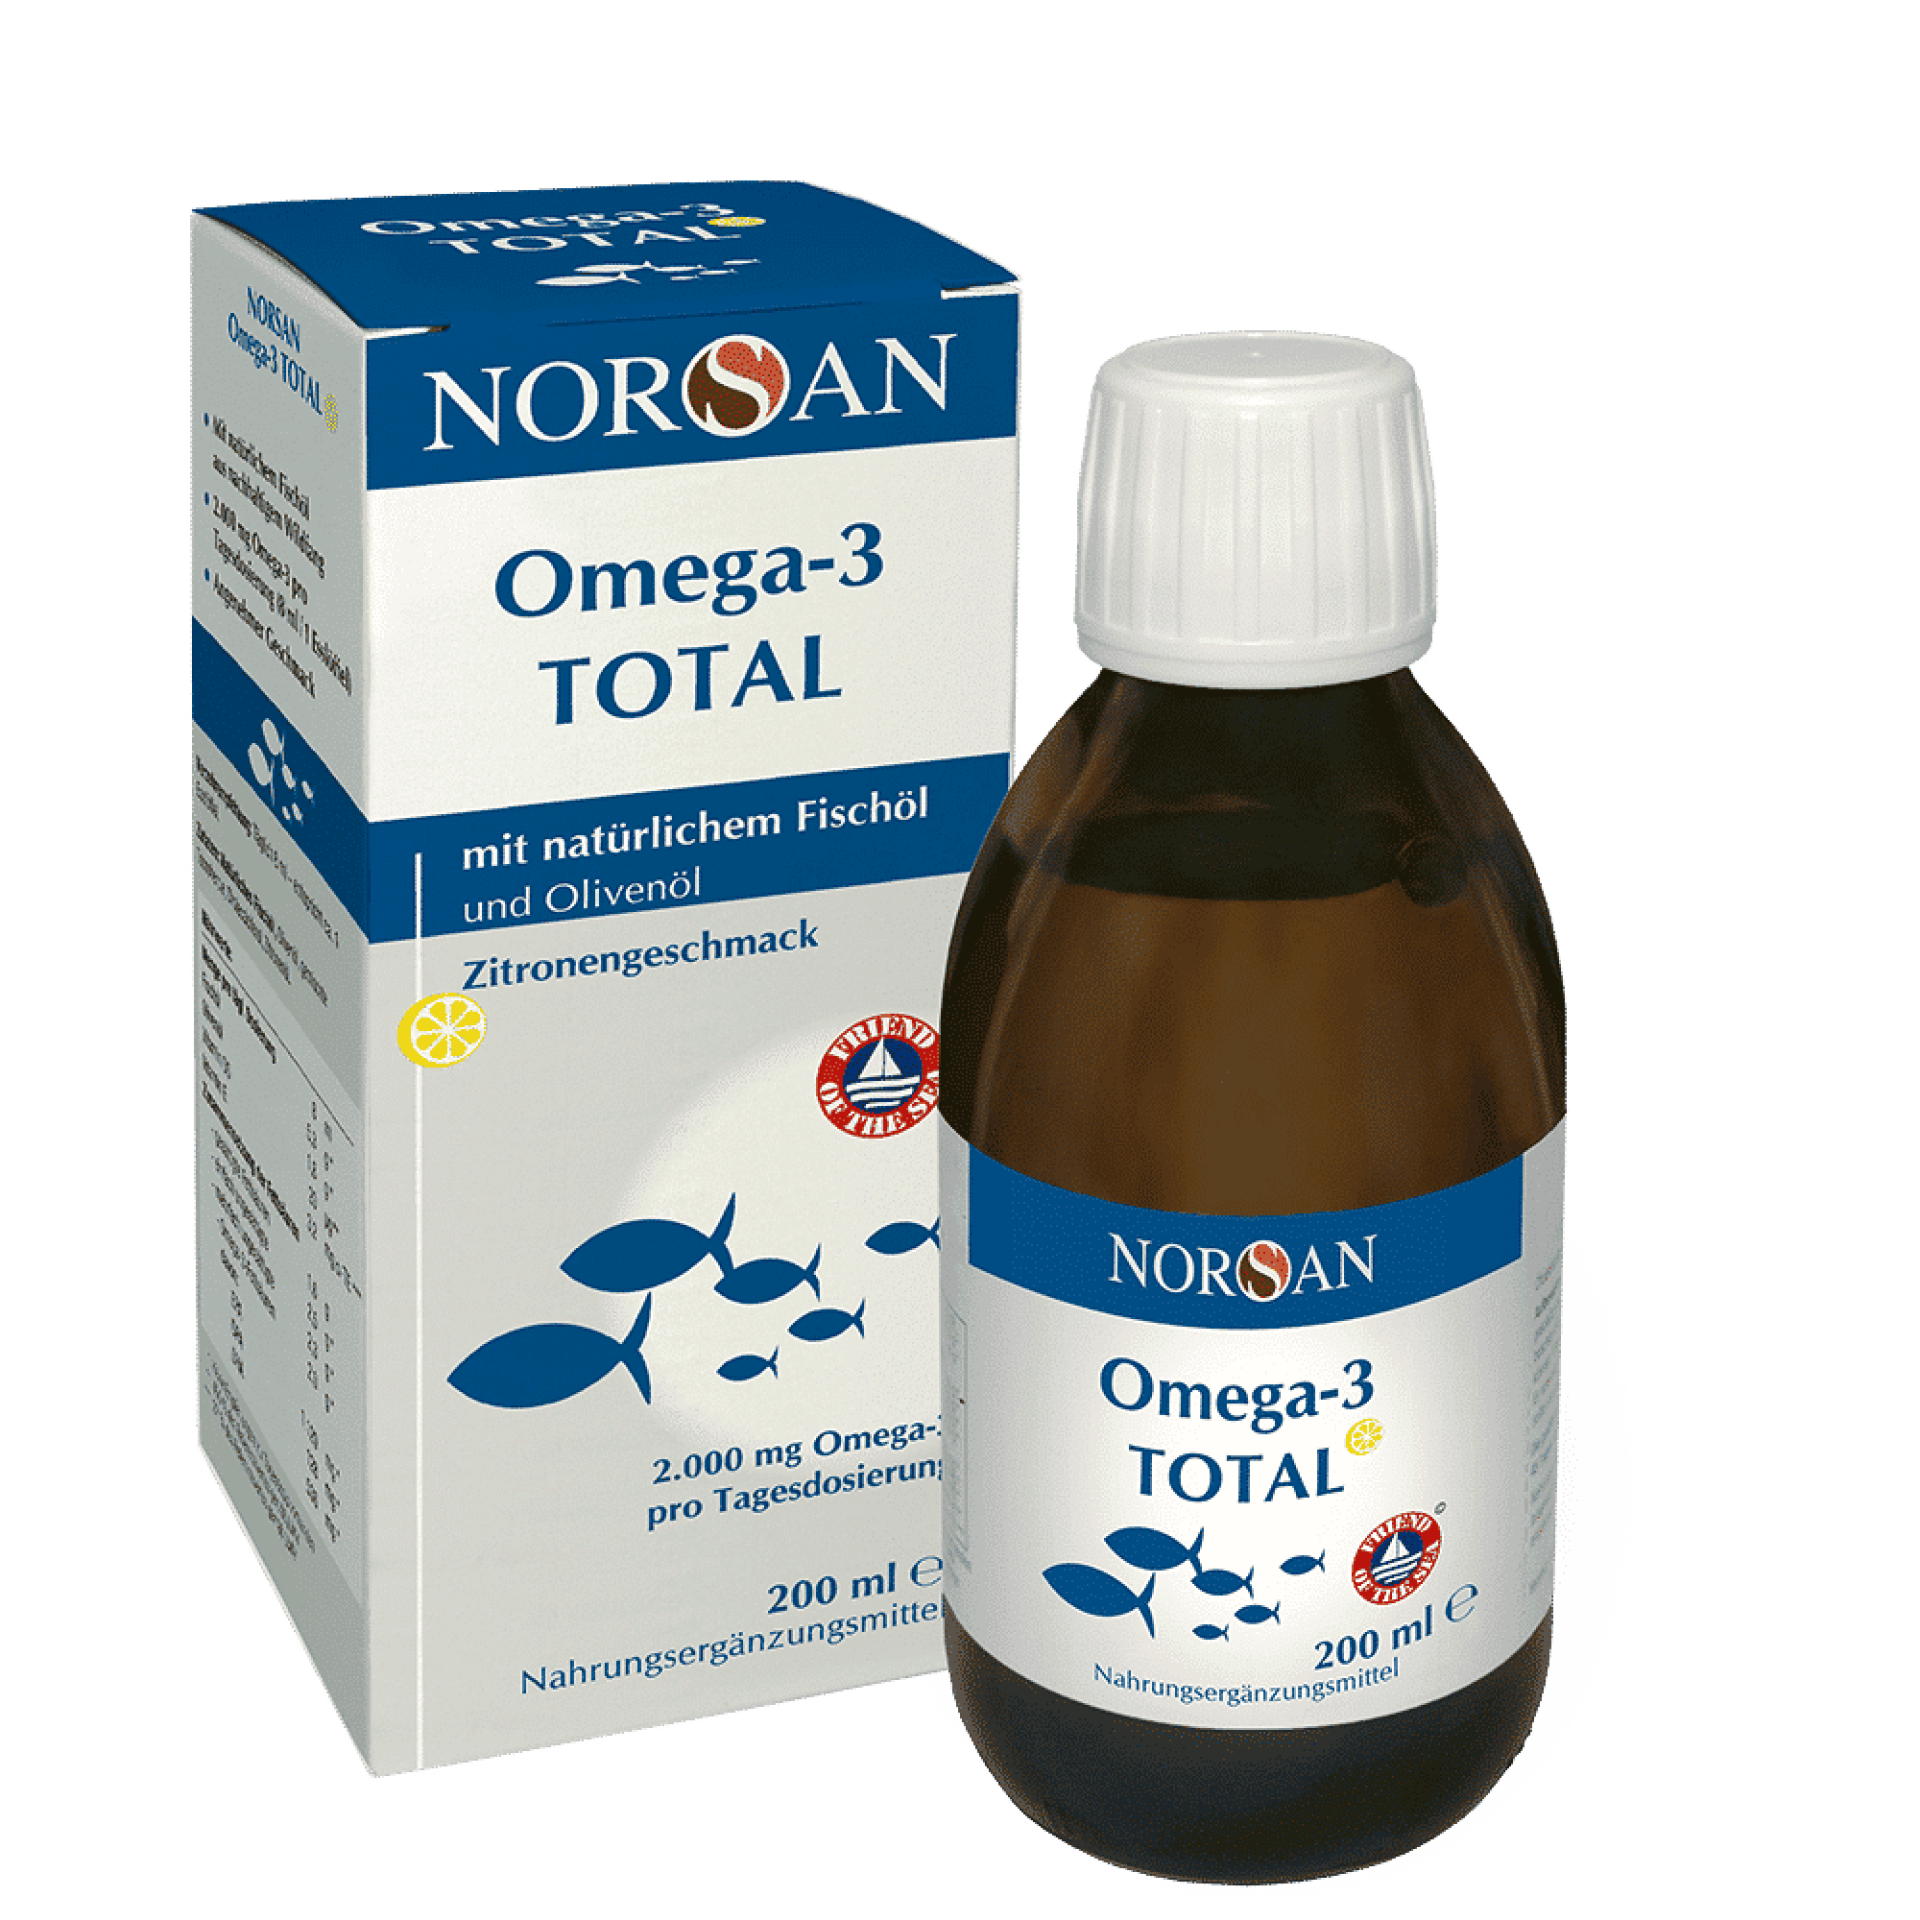 Norsan Omega-3 Total Oil bottle and packaging